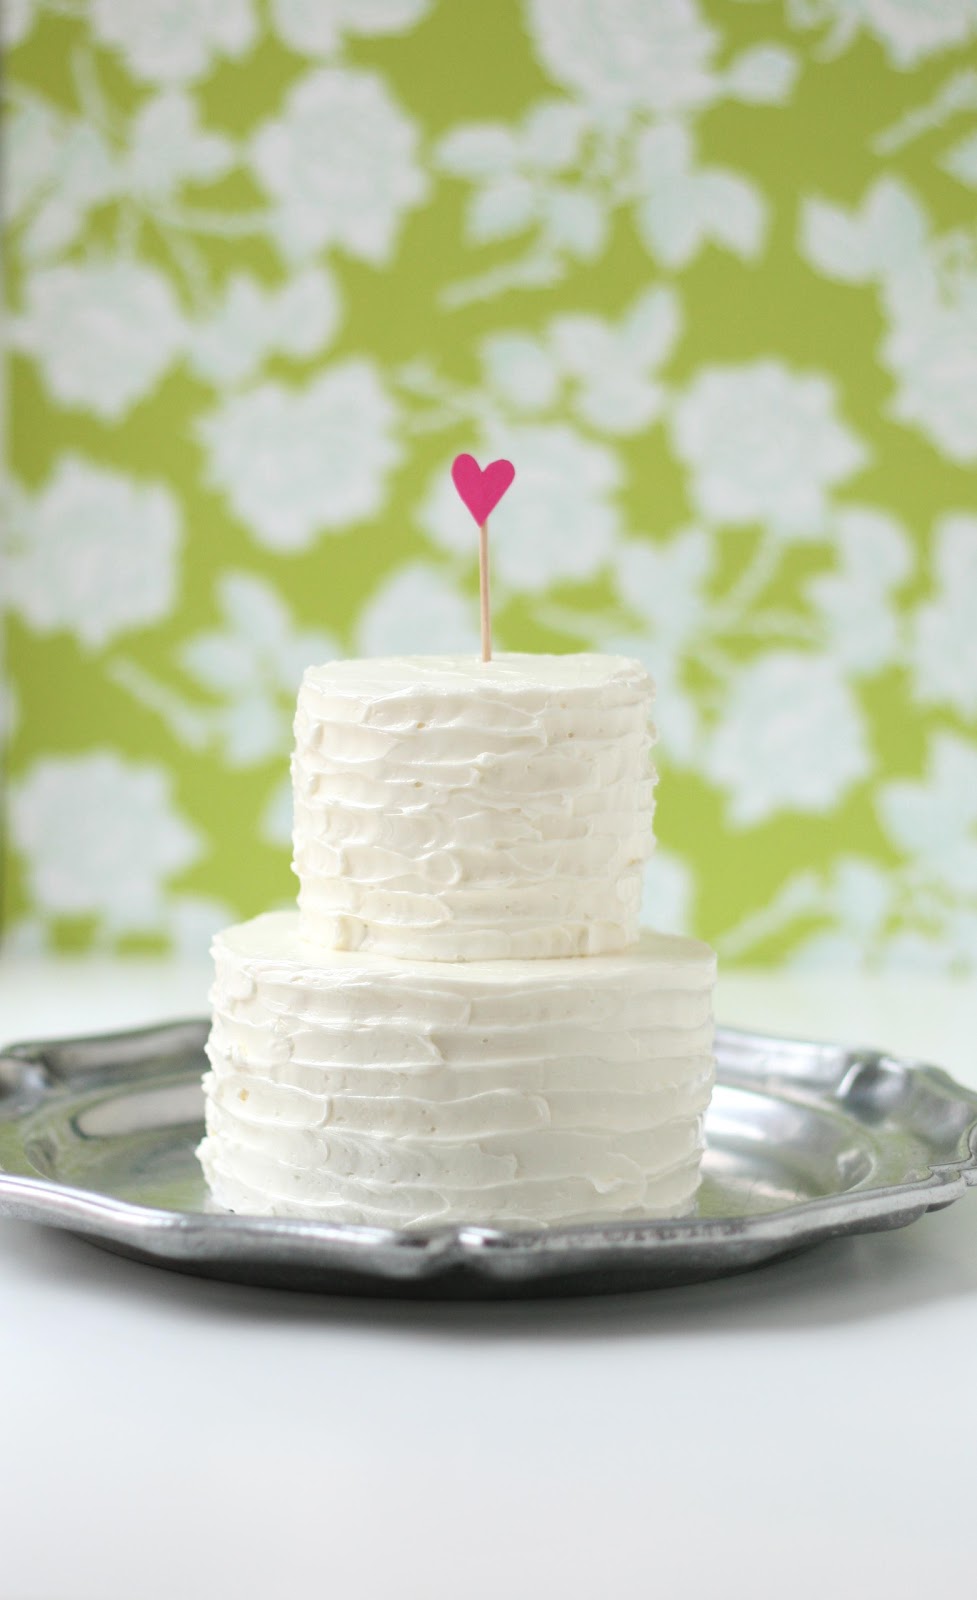 A mini anniversary cake.